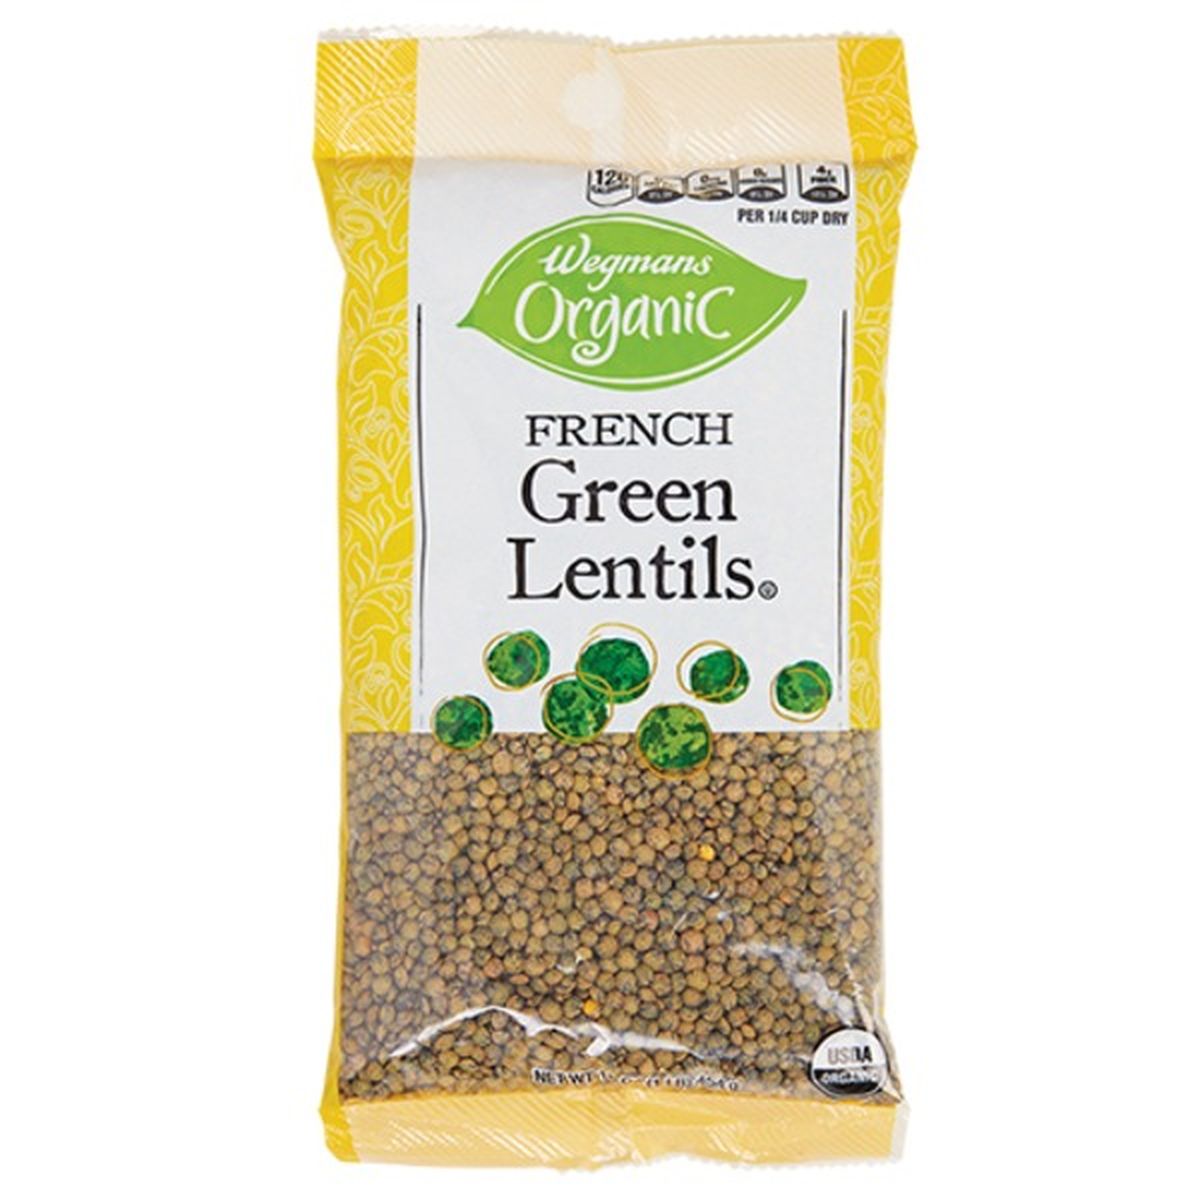 Calories in Wegmans Organic French Green Lentils, Dry